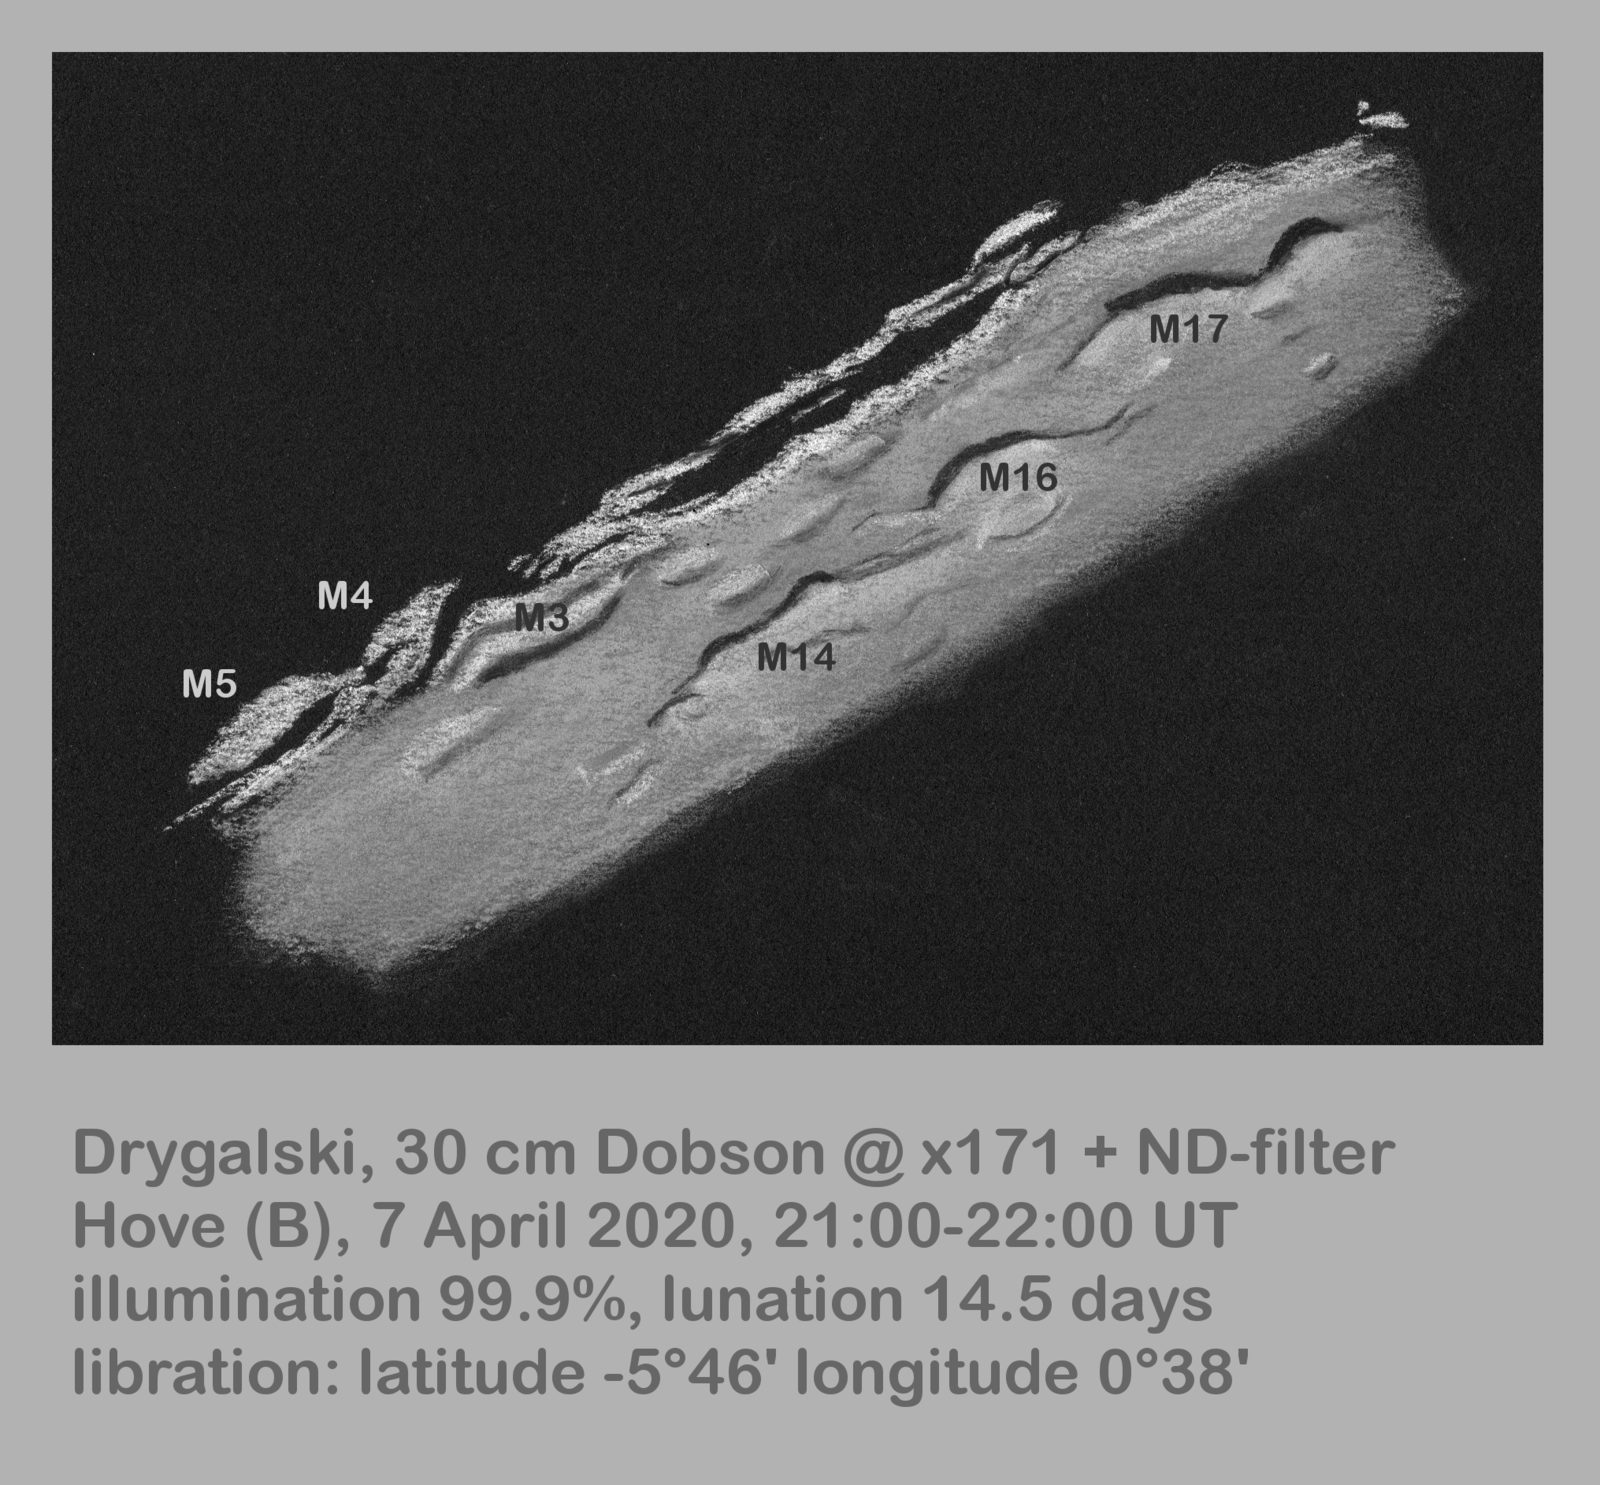 Lunar 096: Leibnitz Mountains (rim of South Pole-Aitken basin)